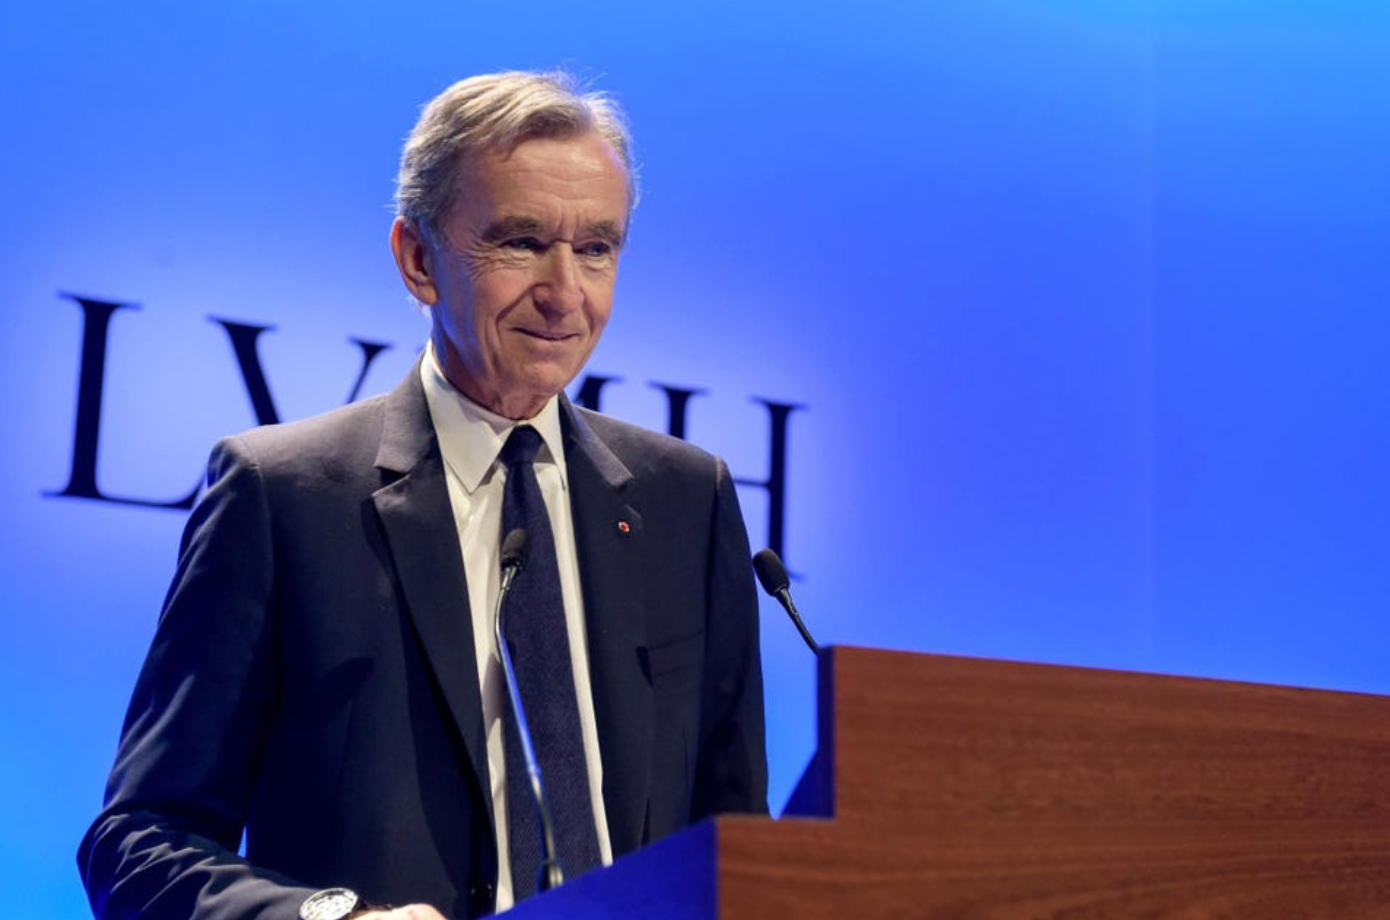 LVMH Shares Drop On Slower Growth, Wiping $6 Billion From Bernard Arnault's  Fortune